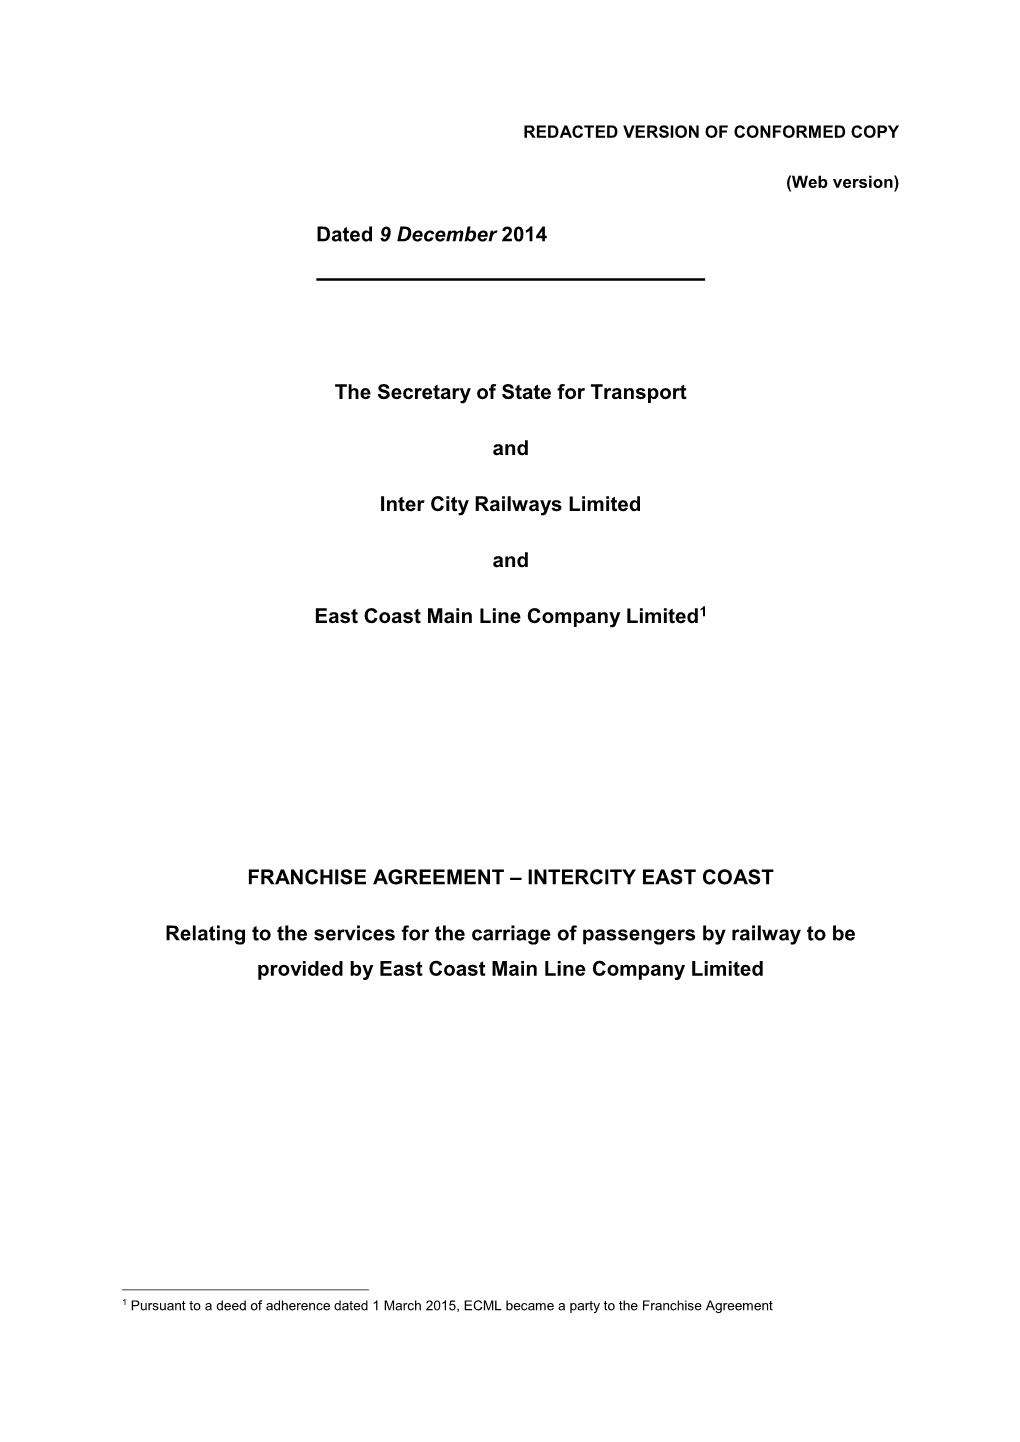 Intercity East Coast Franchise Agreement